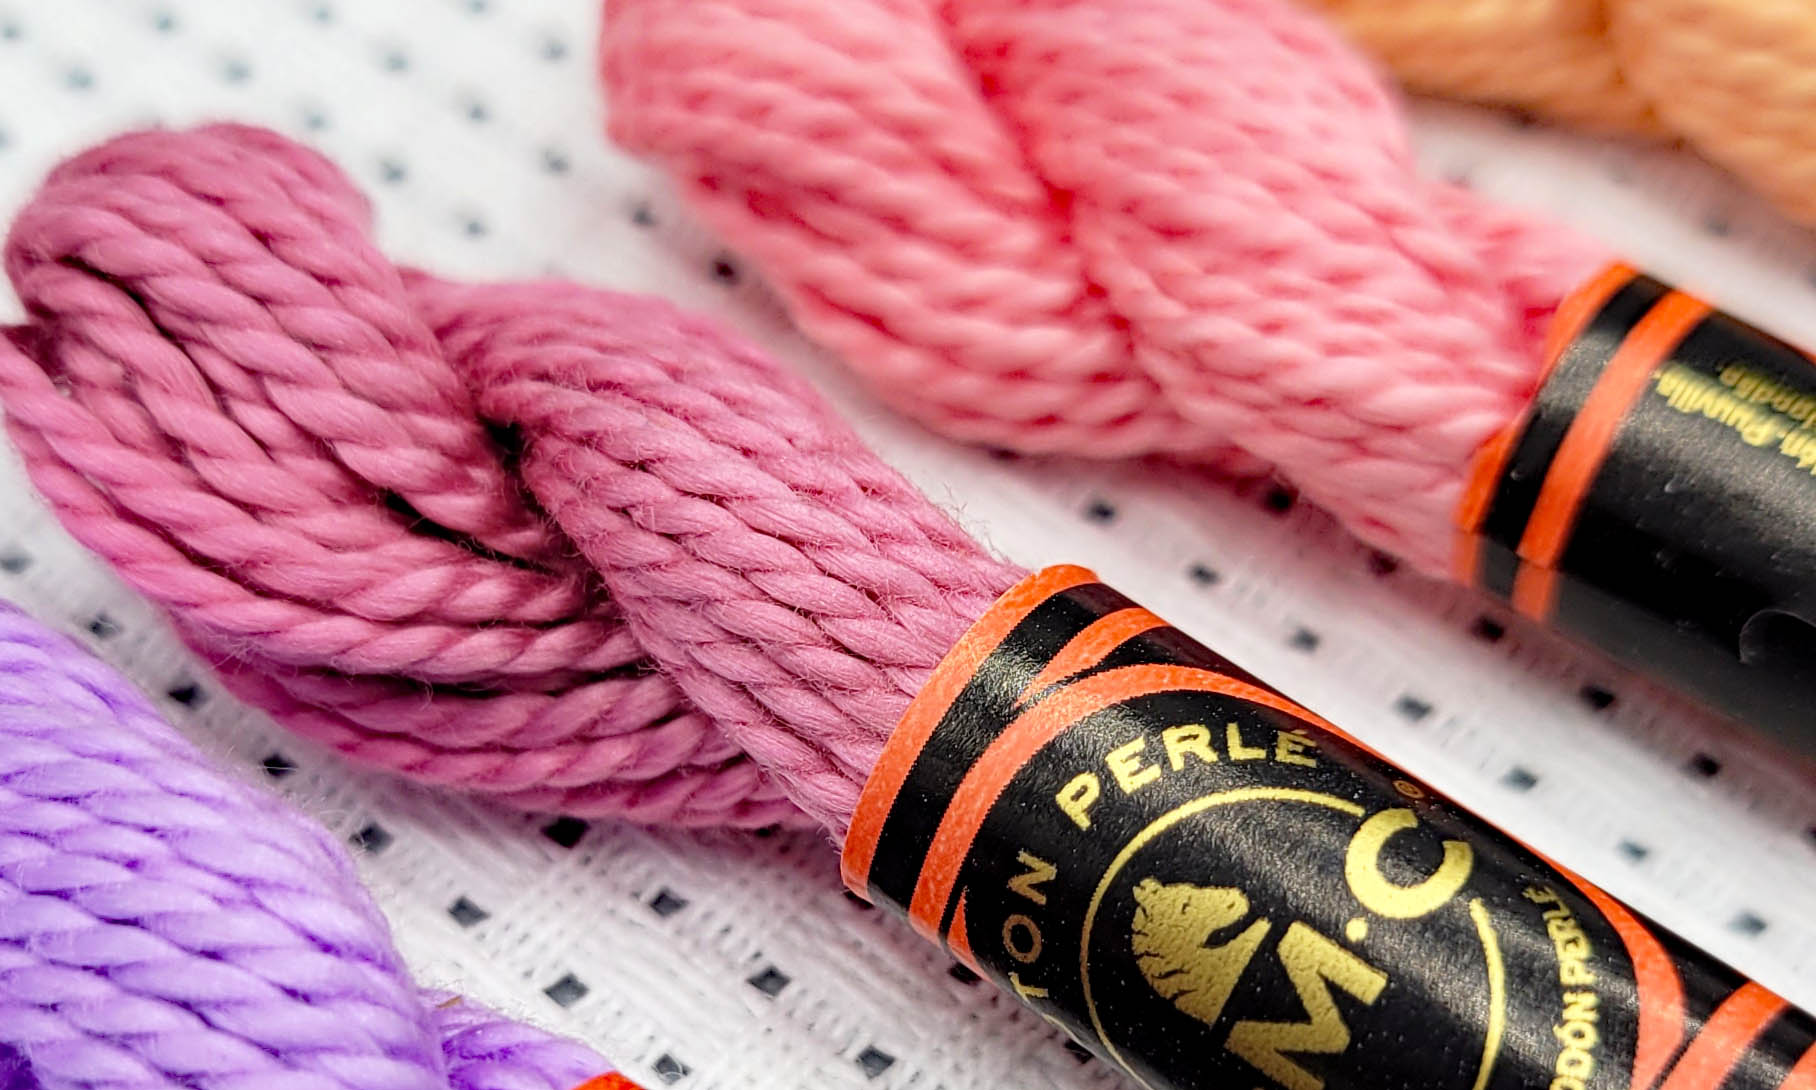  Rhapsody Pearl Cotton Thread Size 8 Crochet Thread Perle 12  Balls Set Hand Knitting, Embroidery, Sashiko, Cross-Stitch, Sewing,  Needlepoint, DIY, Quilting (Aquamarine, Col. 611) : Arts, Crafts & Sewing